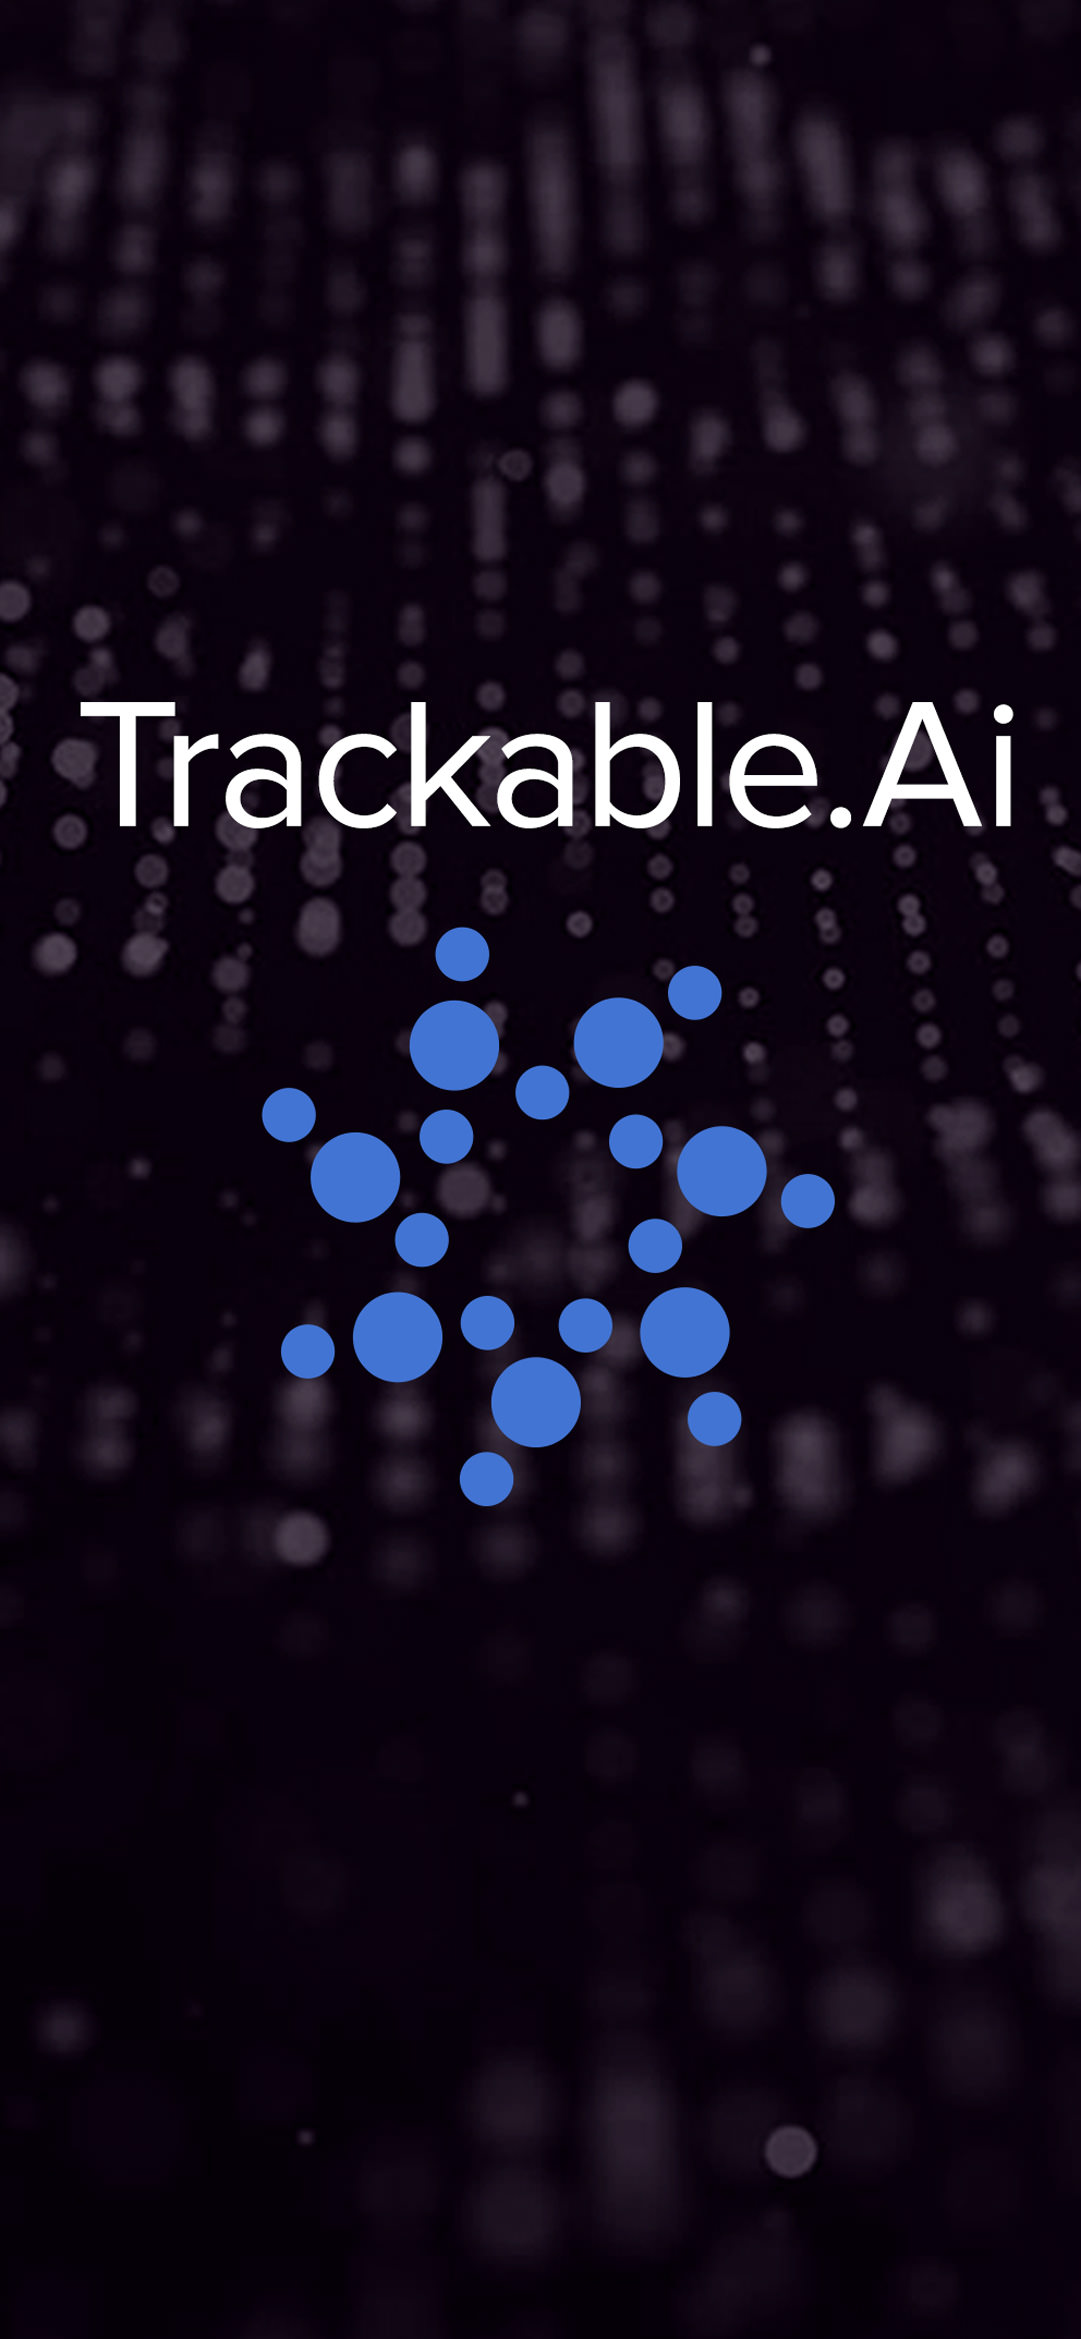 Trackable.AI